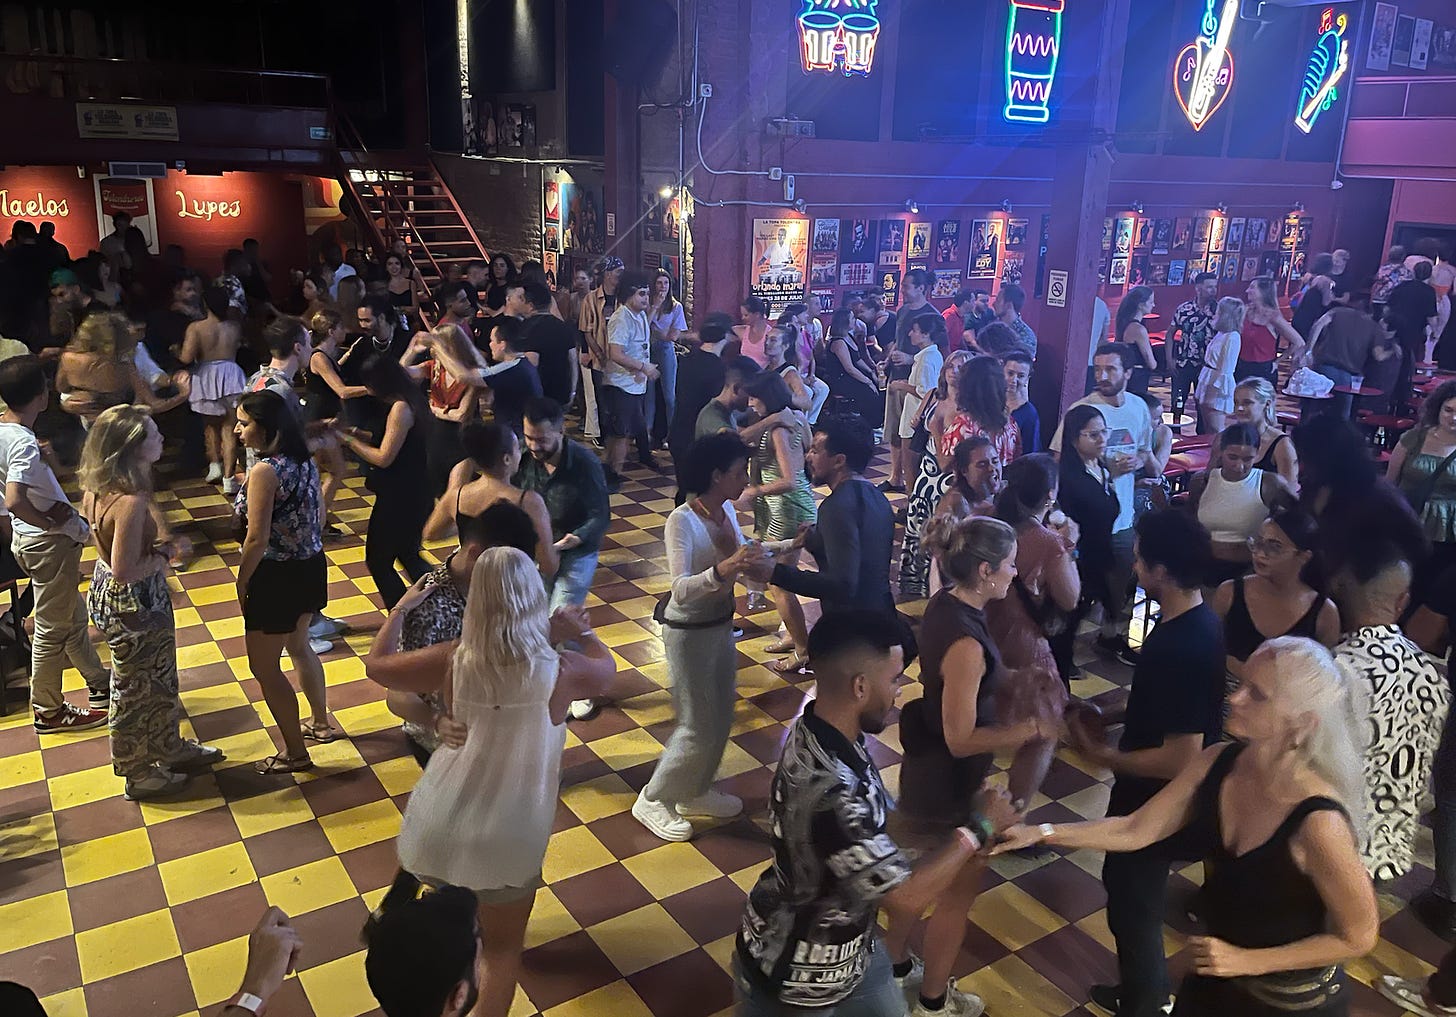 Full dance floor at salsa club